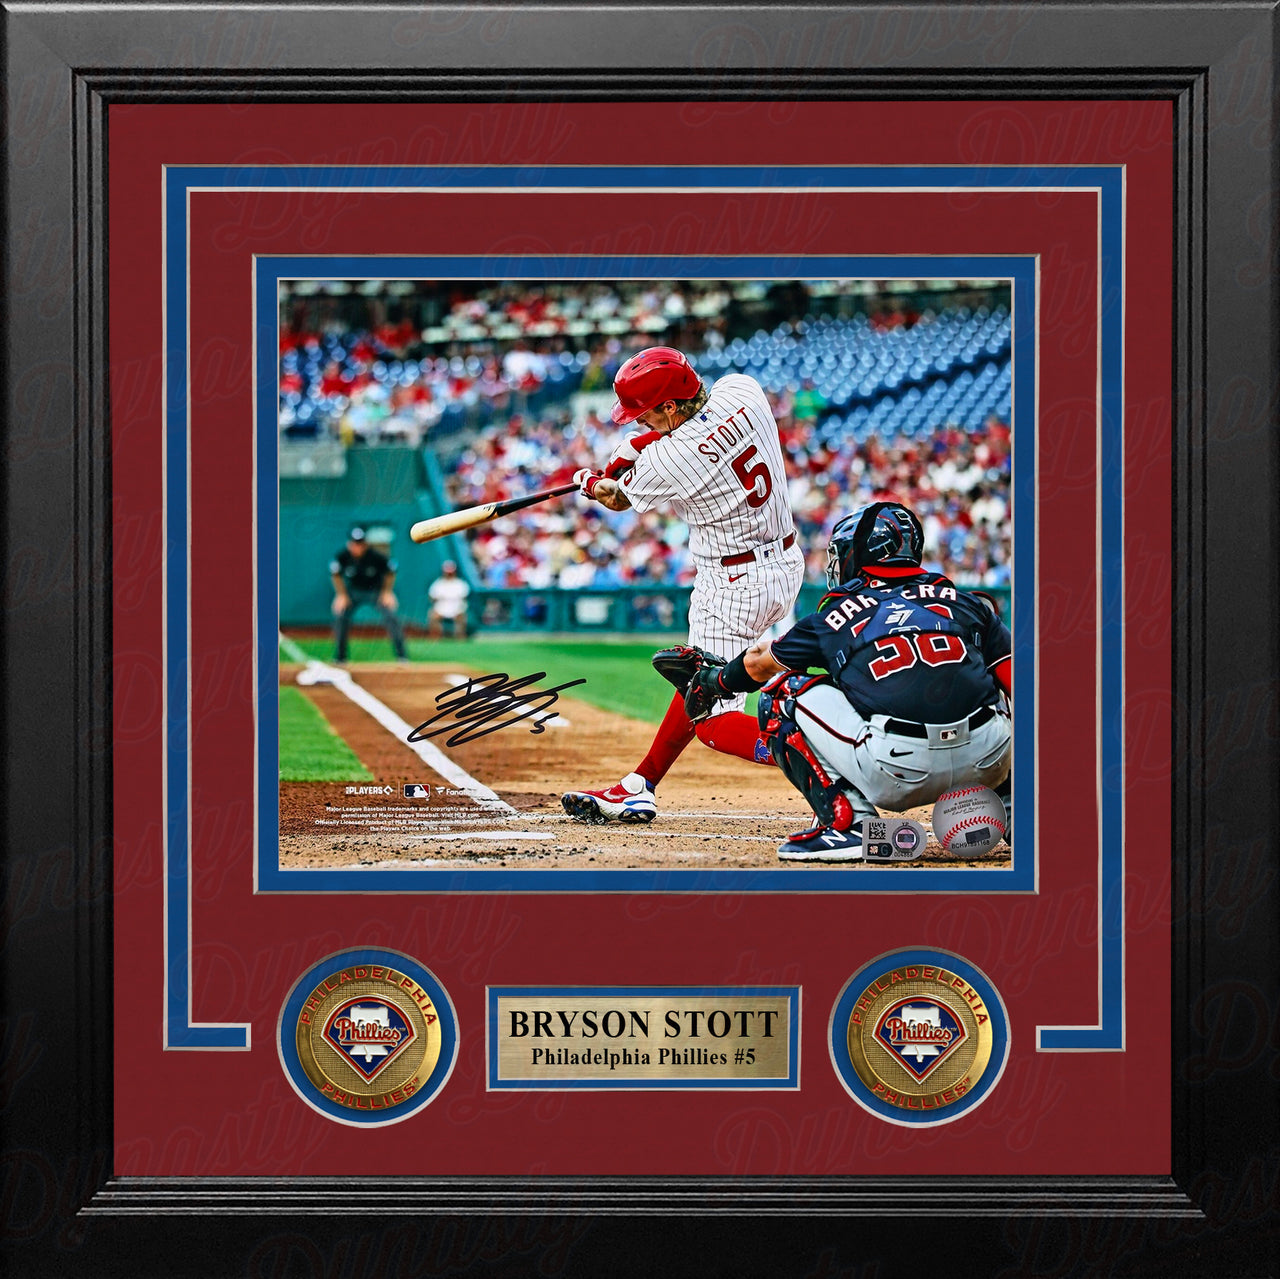 Bryson Stott Home Run Swing Philadelphia Phillies Autographed 8" x 10" Framed Baseball Photo